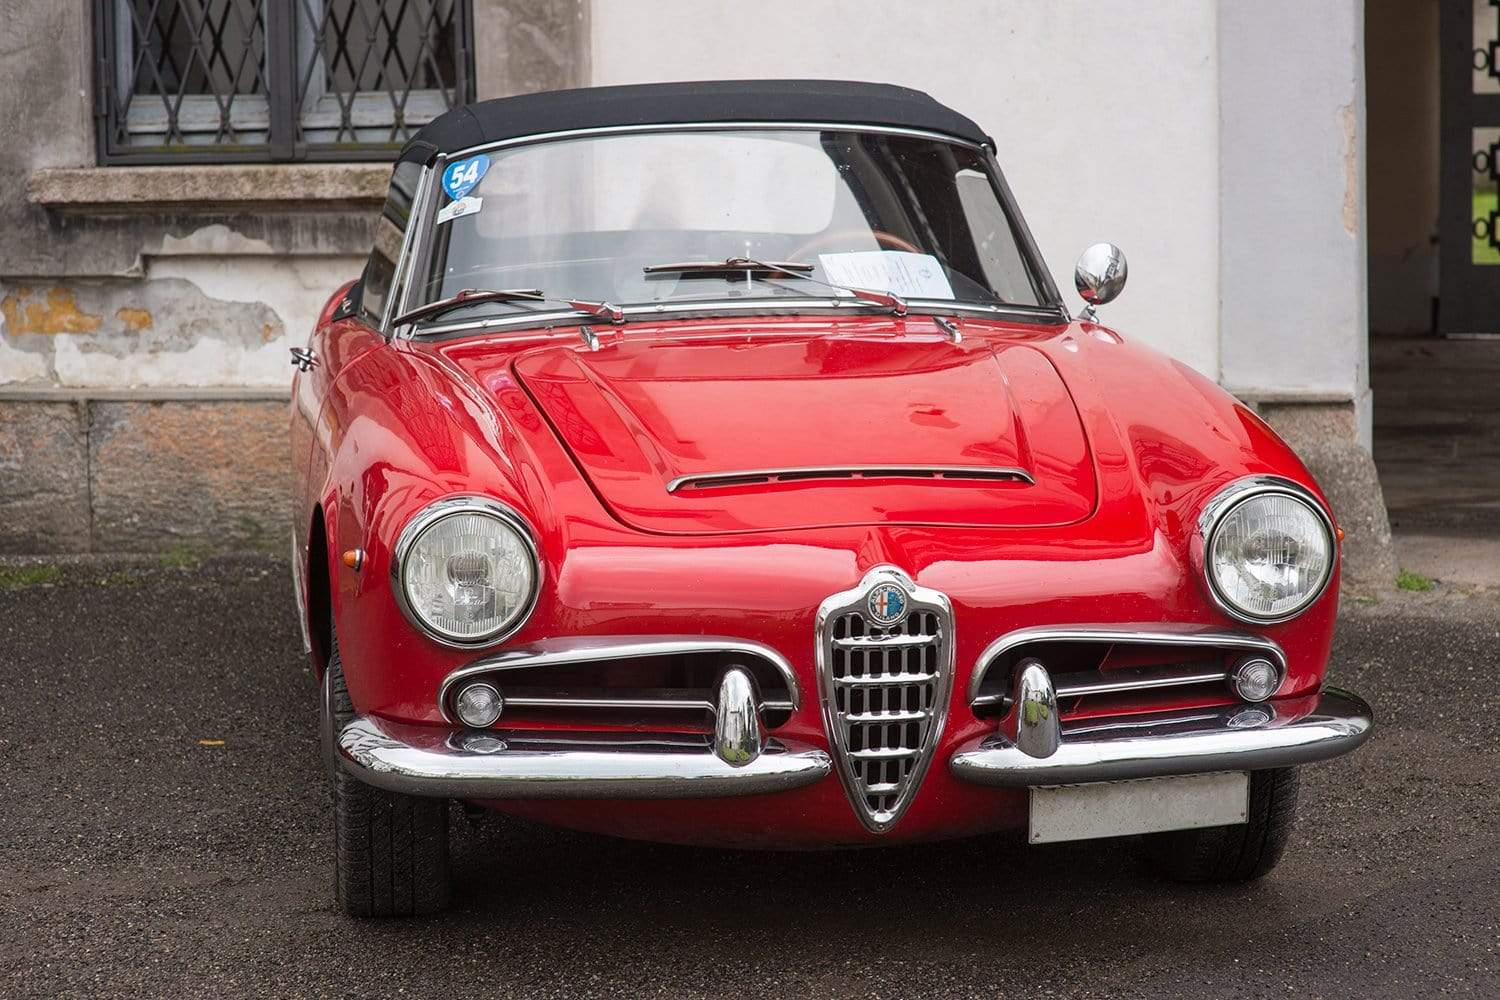 1961 Alfa Romeo Giulietta Spider - Rent – THE OUTLIERMAN